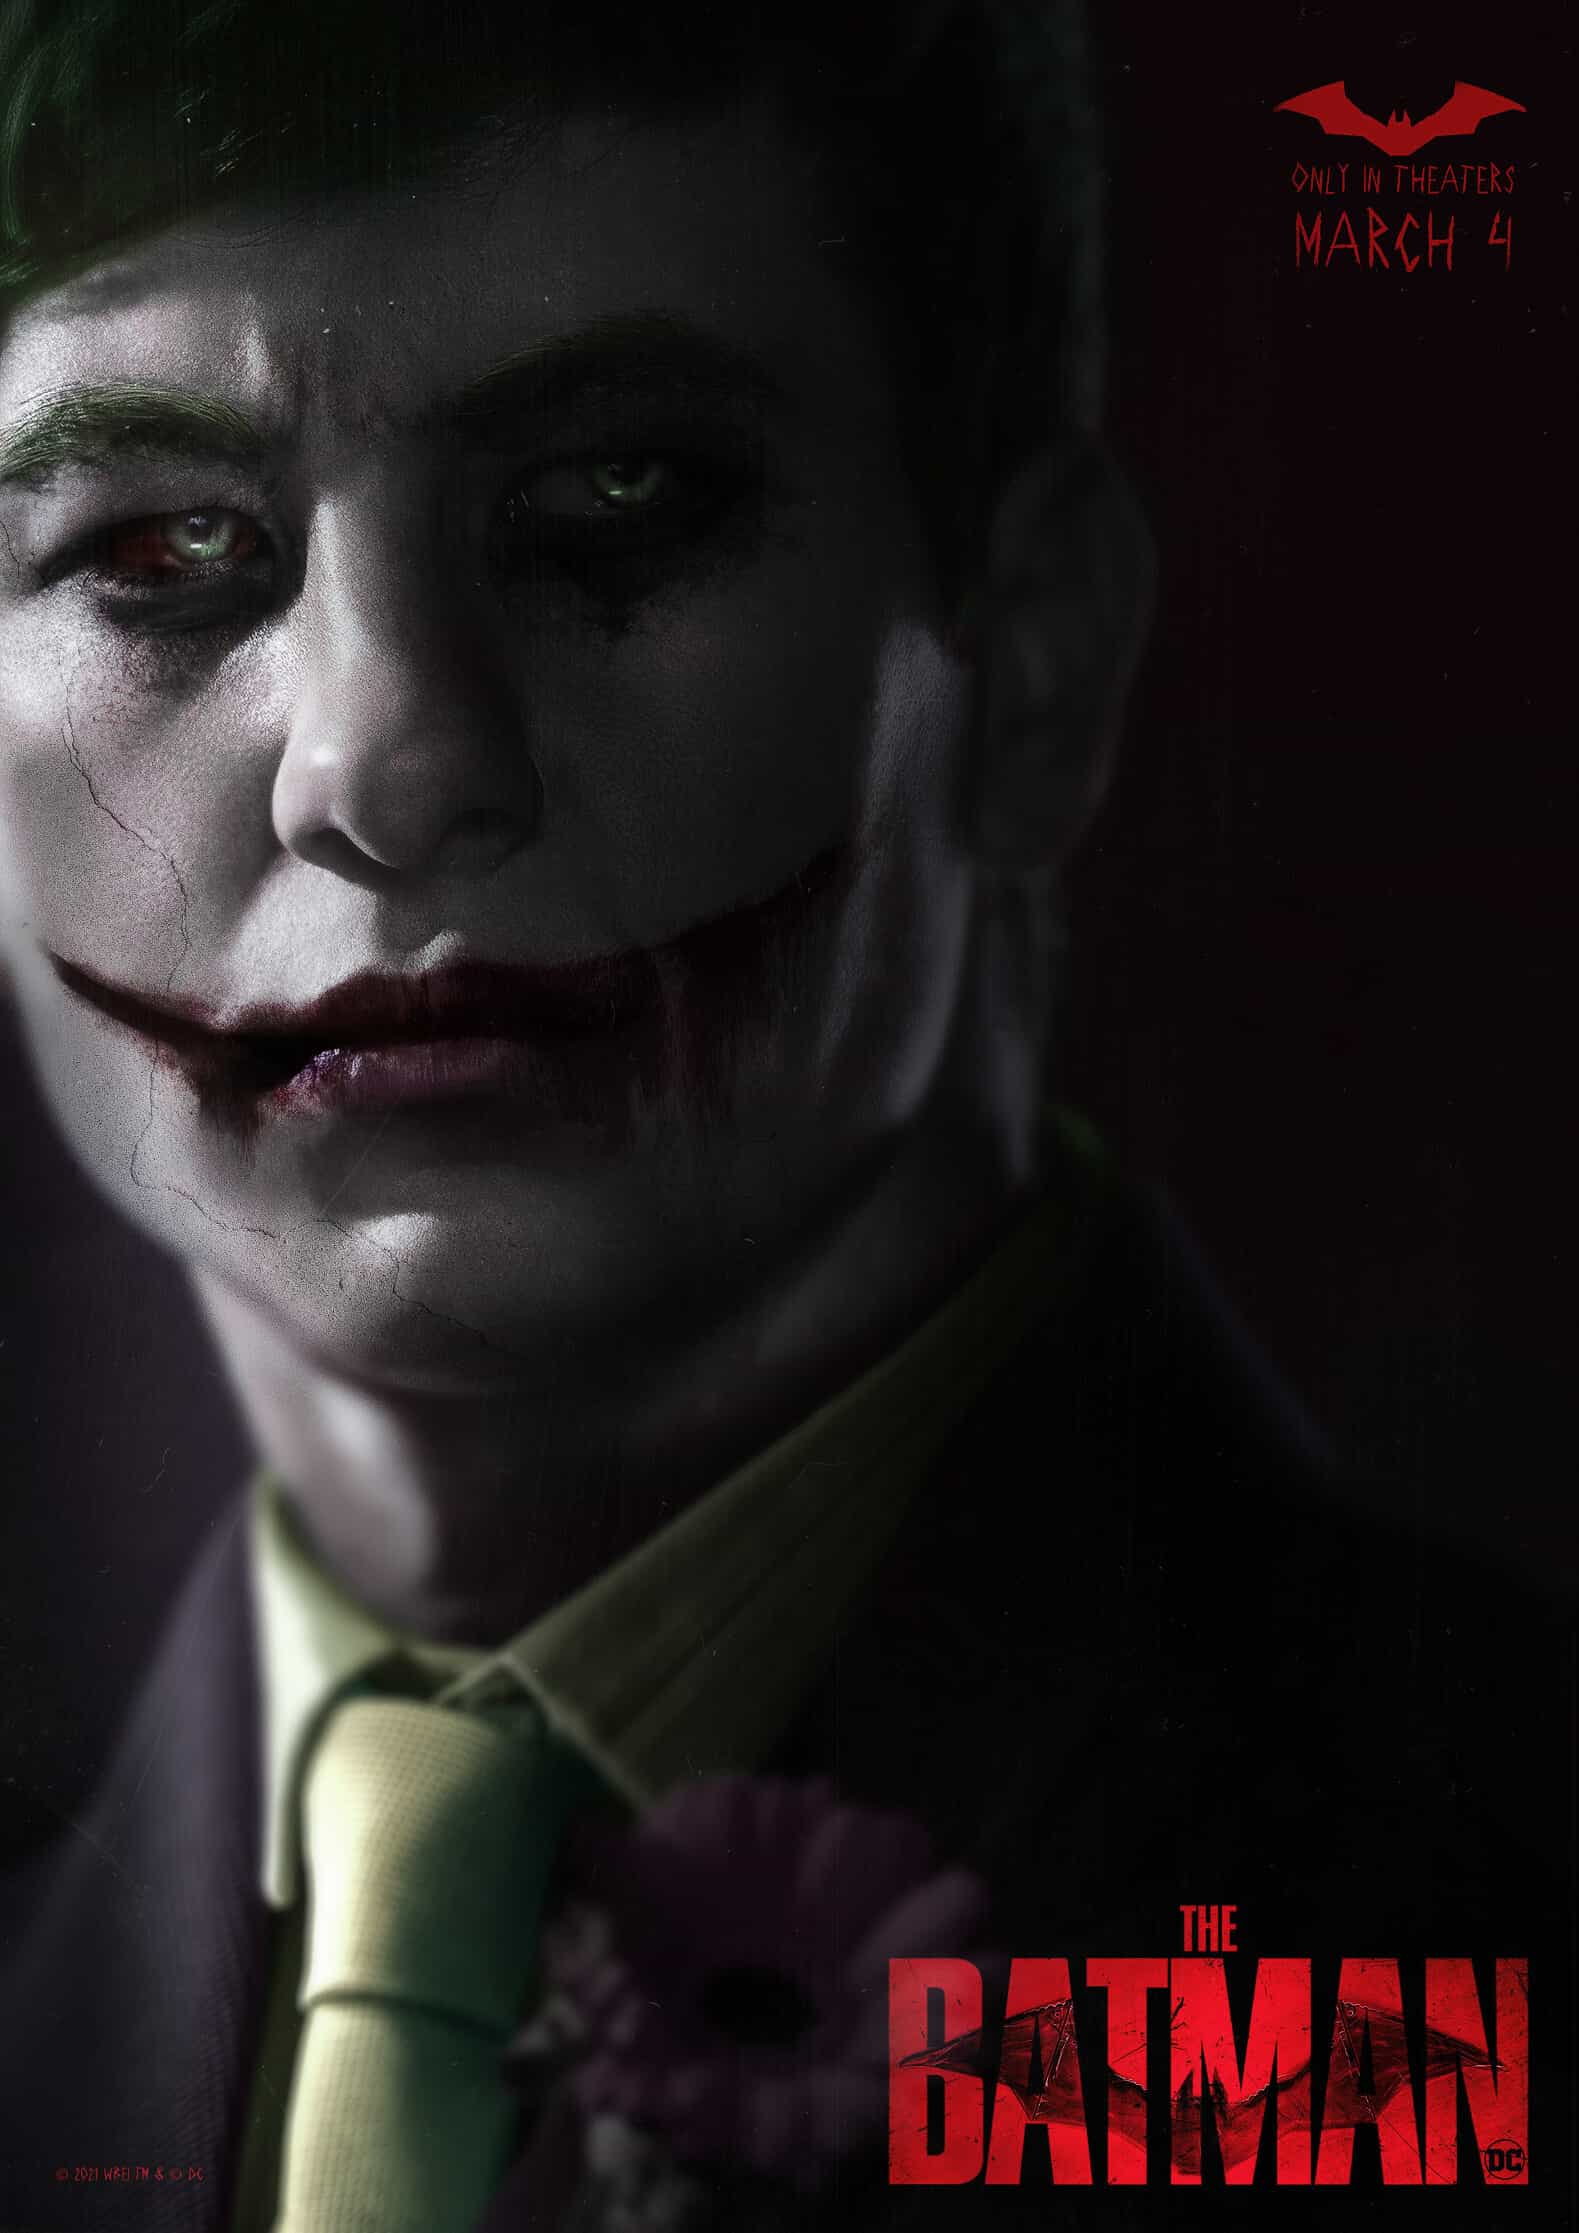 The Batman's Joker Actor Might've Already Been Revealed